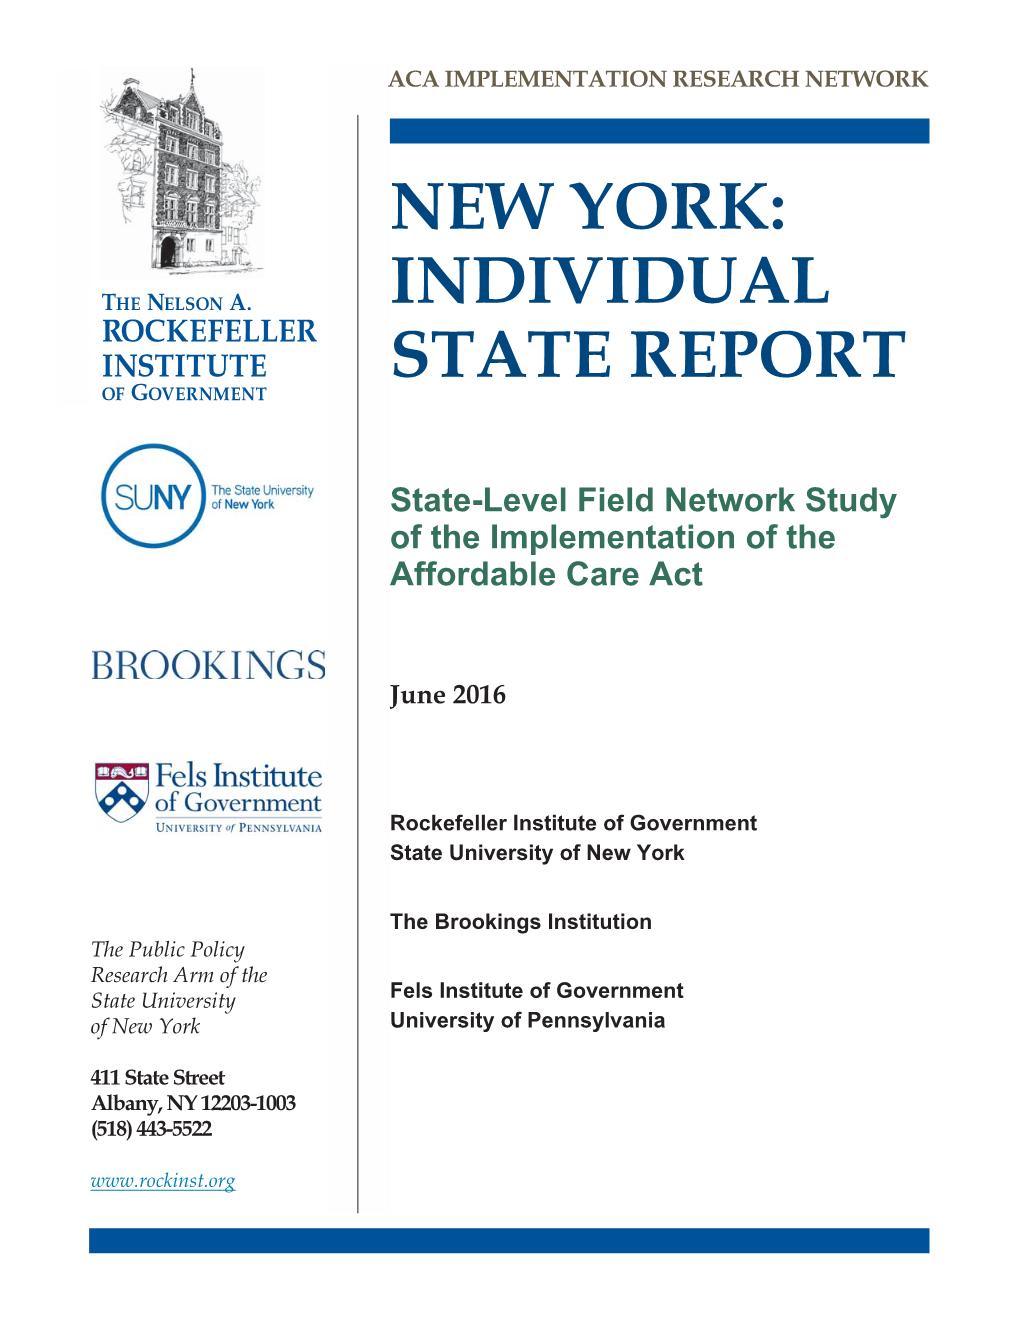 New York: Individual State Report